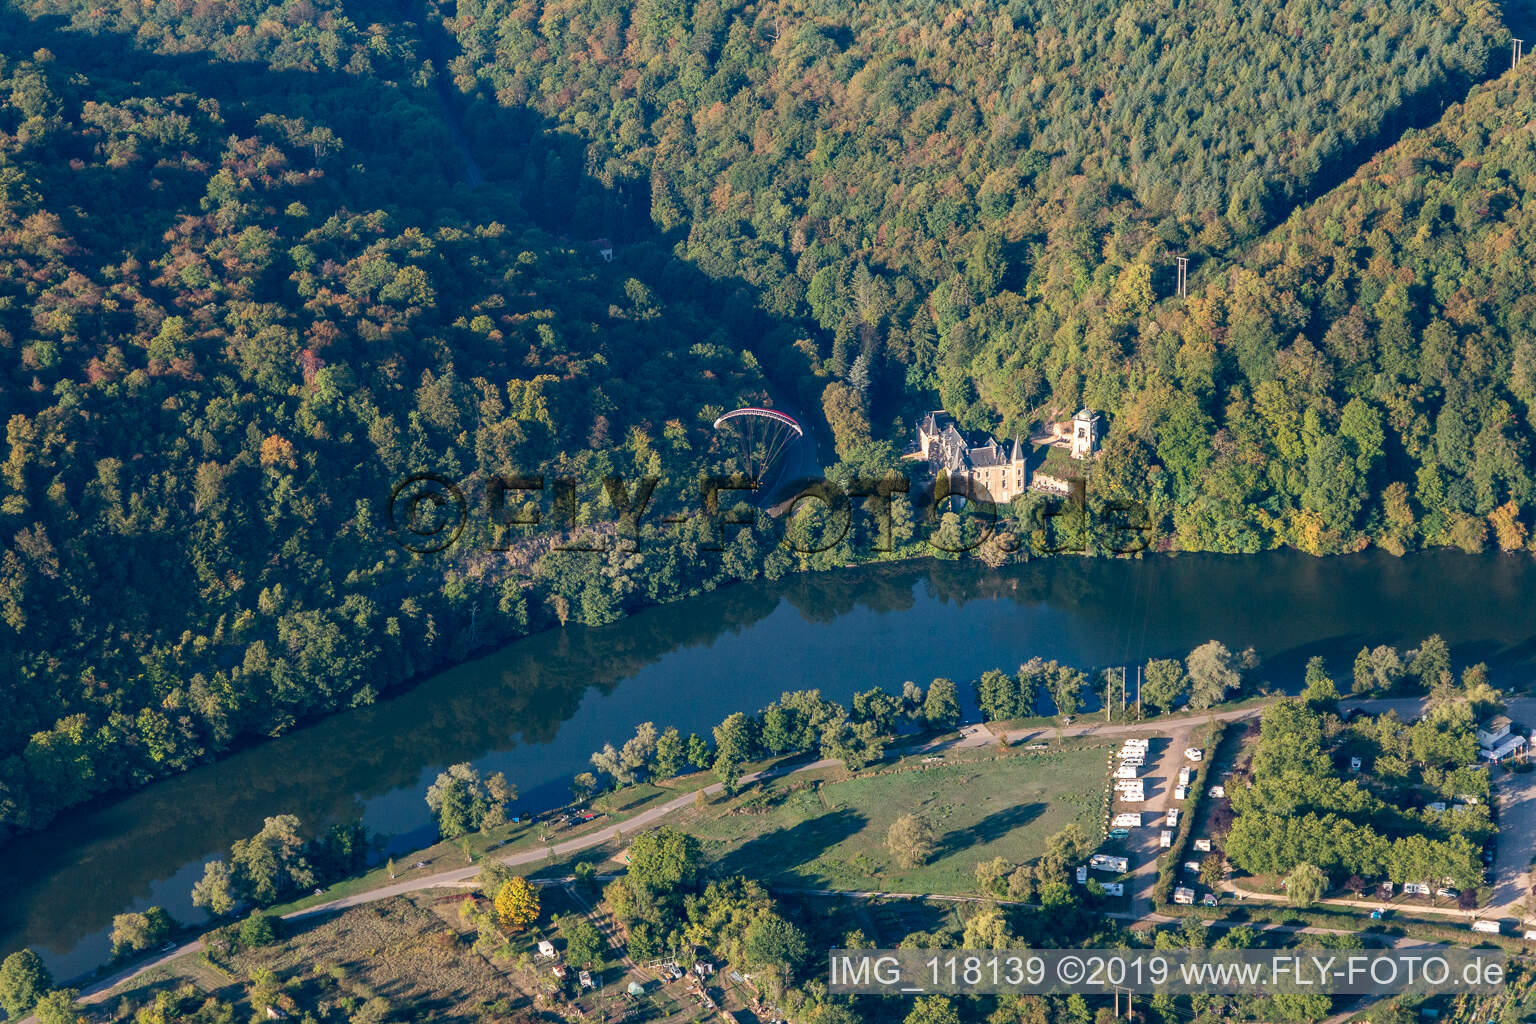 Luftbild von Chateau de la Flie an der Mosel in Liverdun im Bundesland Meurthe-et-Moselle, Frankreich